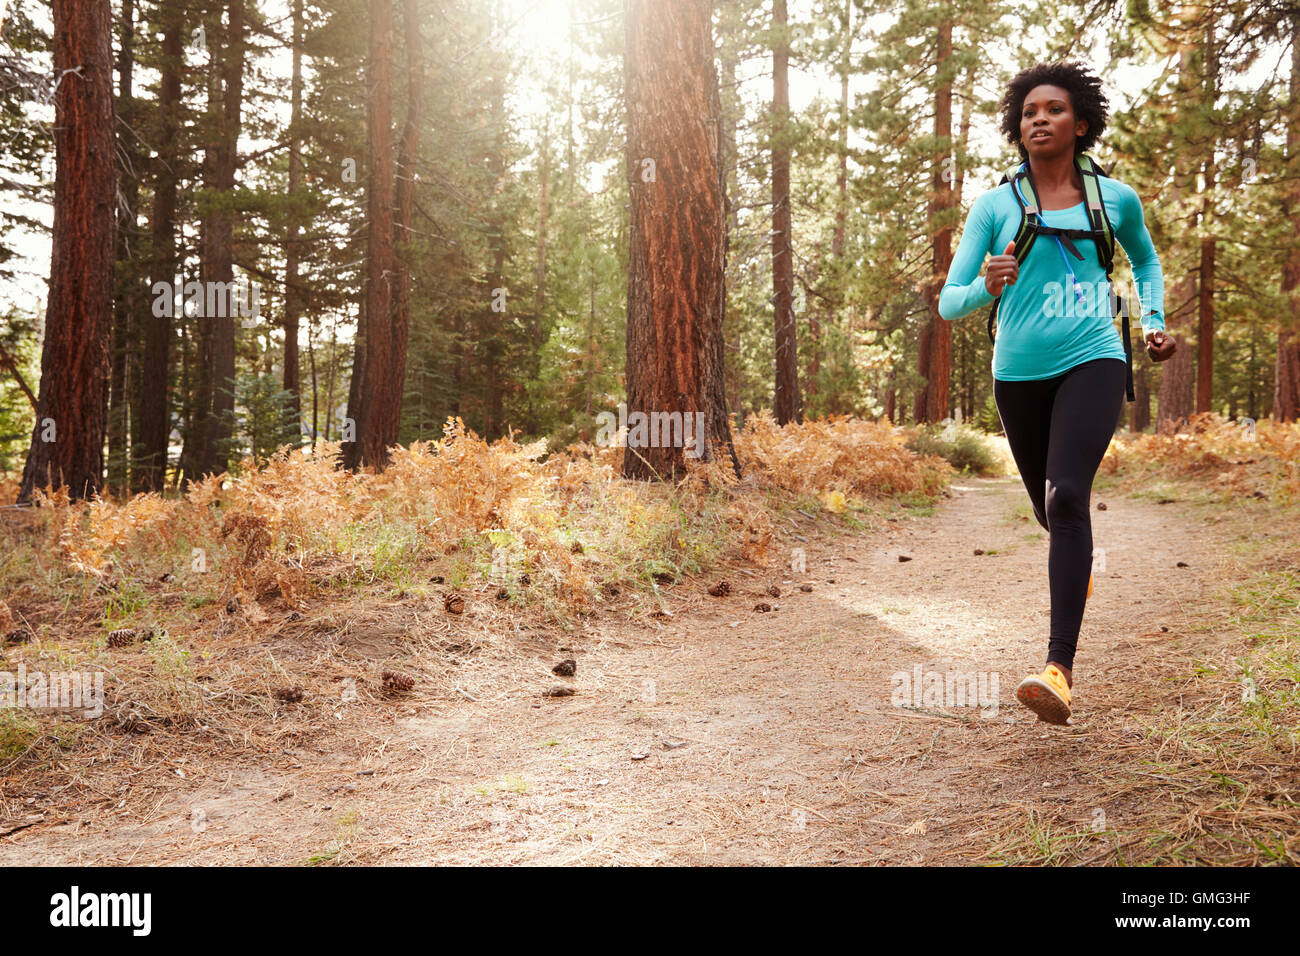 L'origine ethnique afro-américaine woman running in a forest Banque D'Images